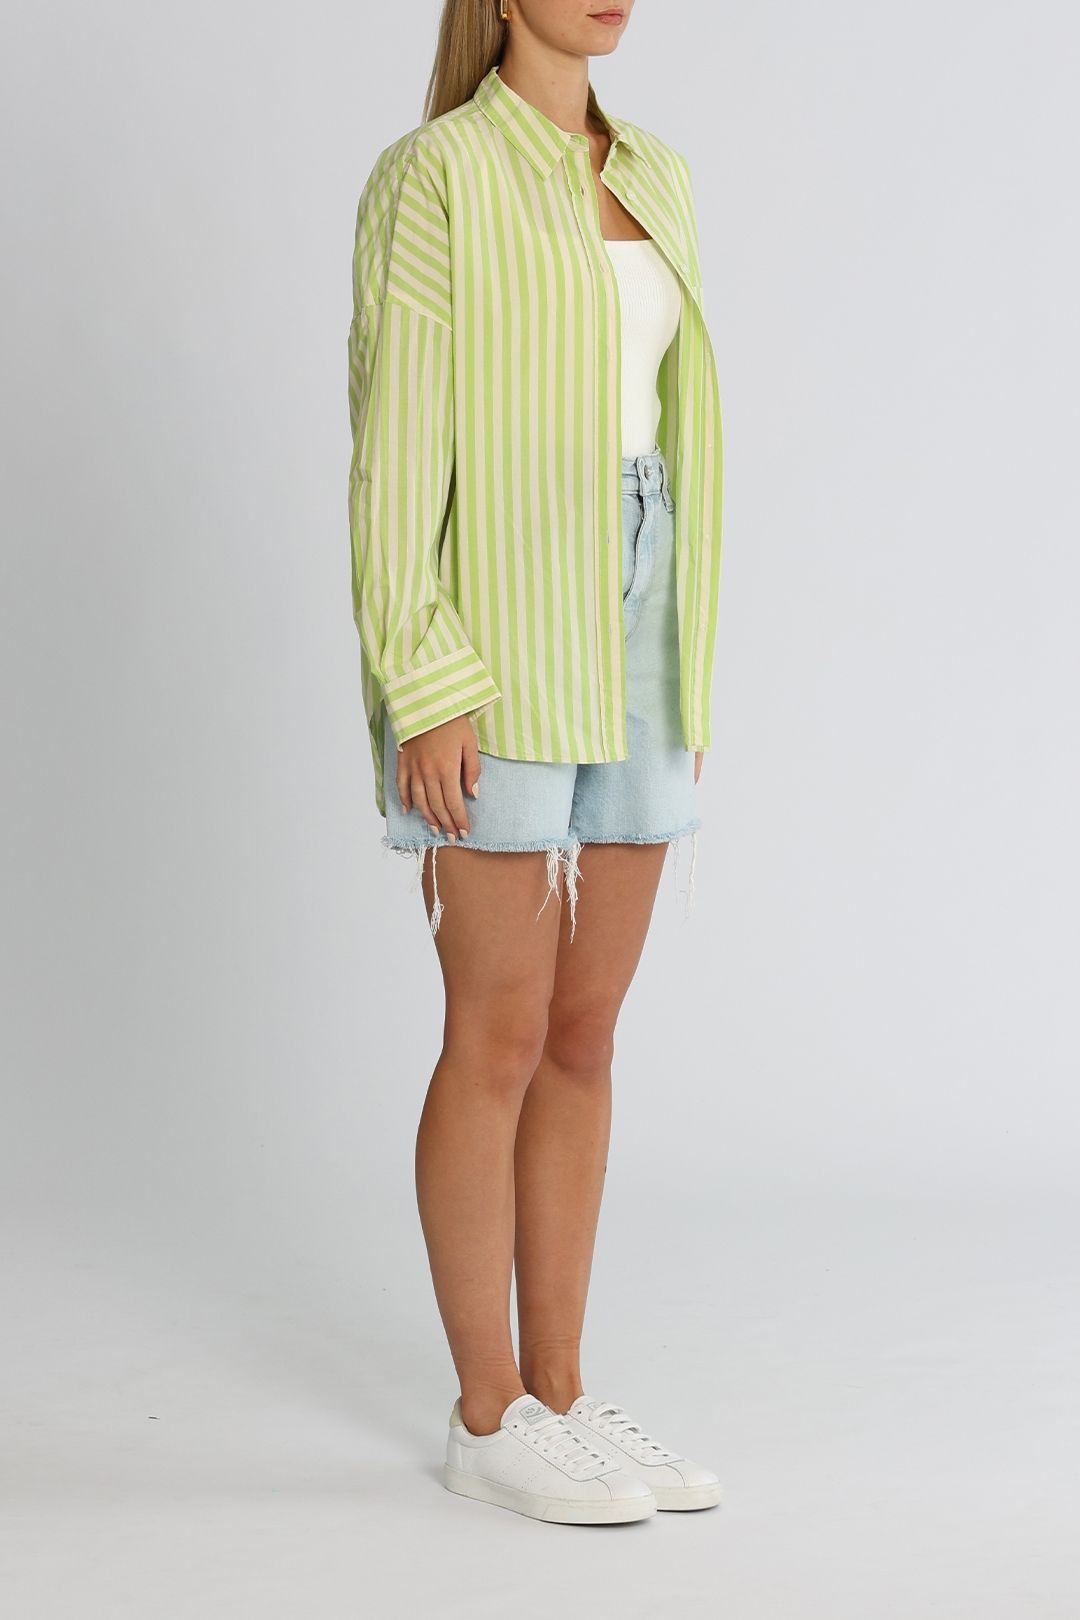 LMND Chiara Shirt Stripe Green Glow Long Sleeves